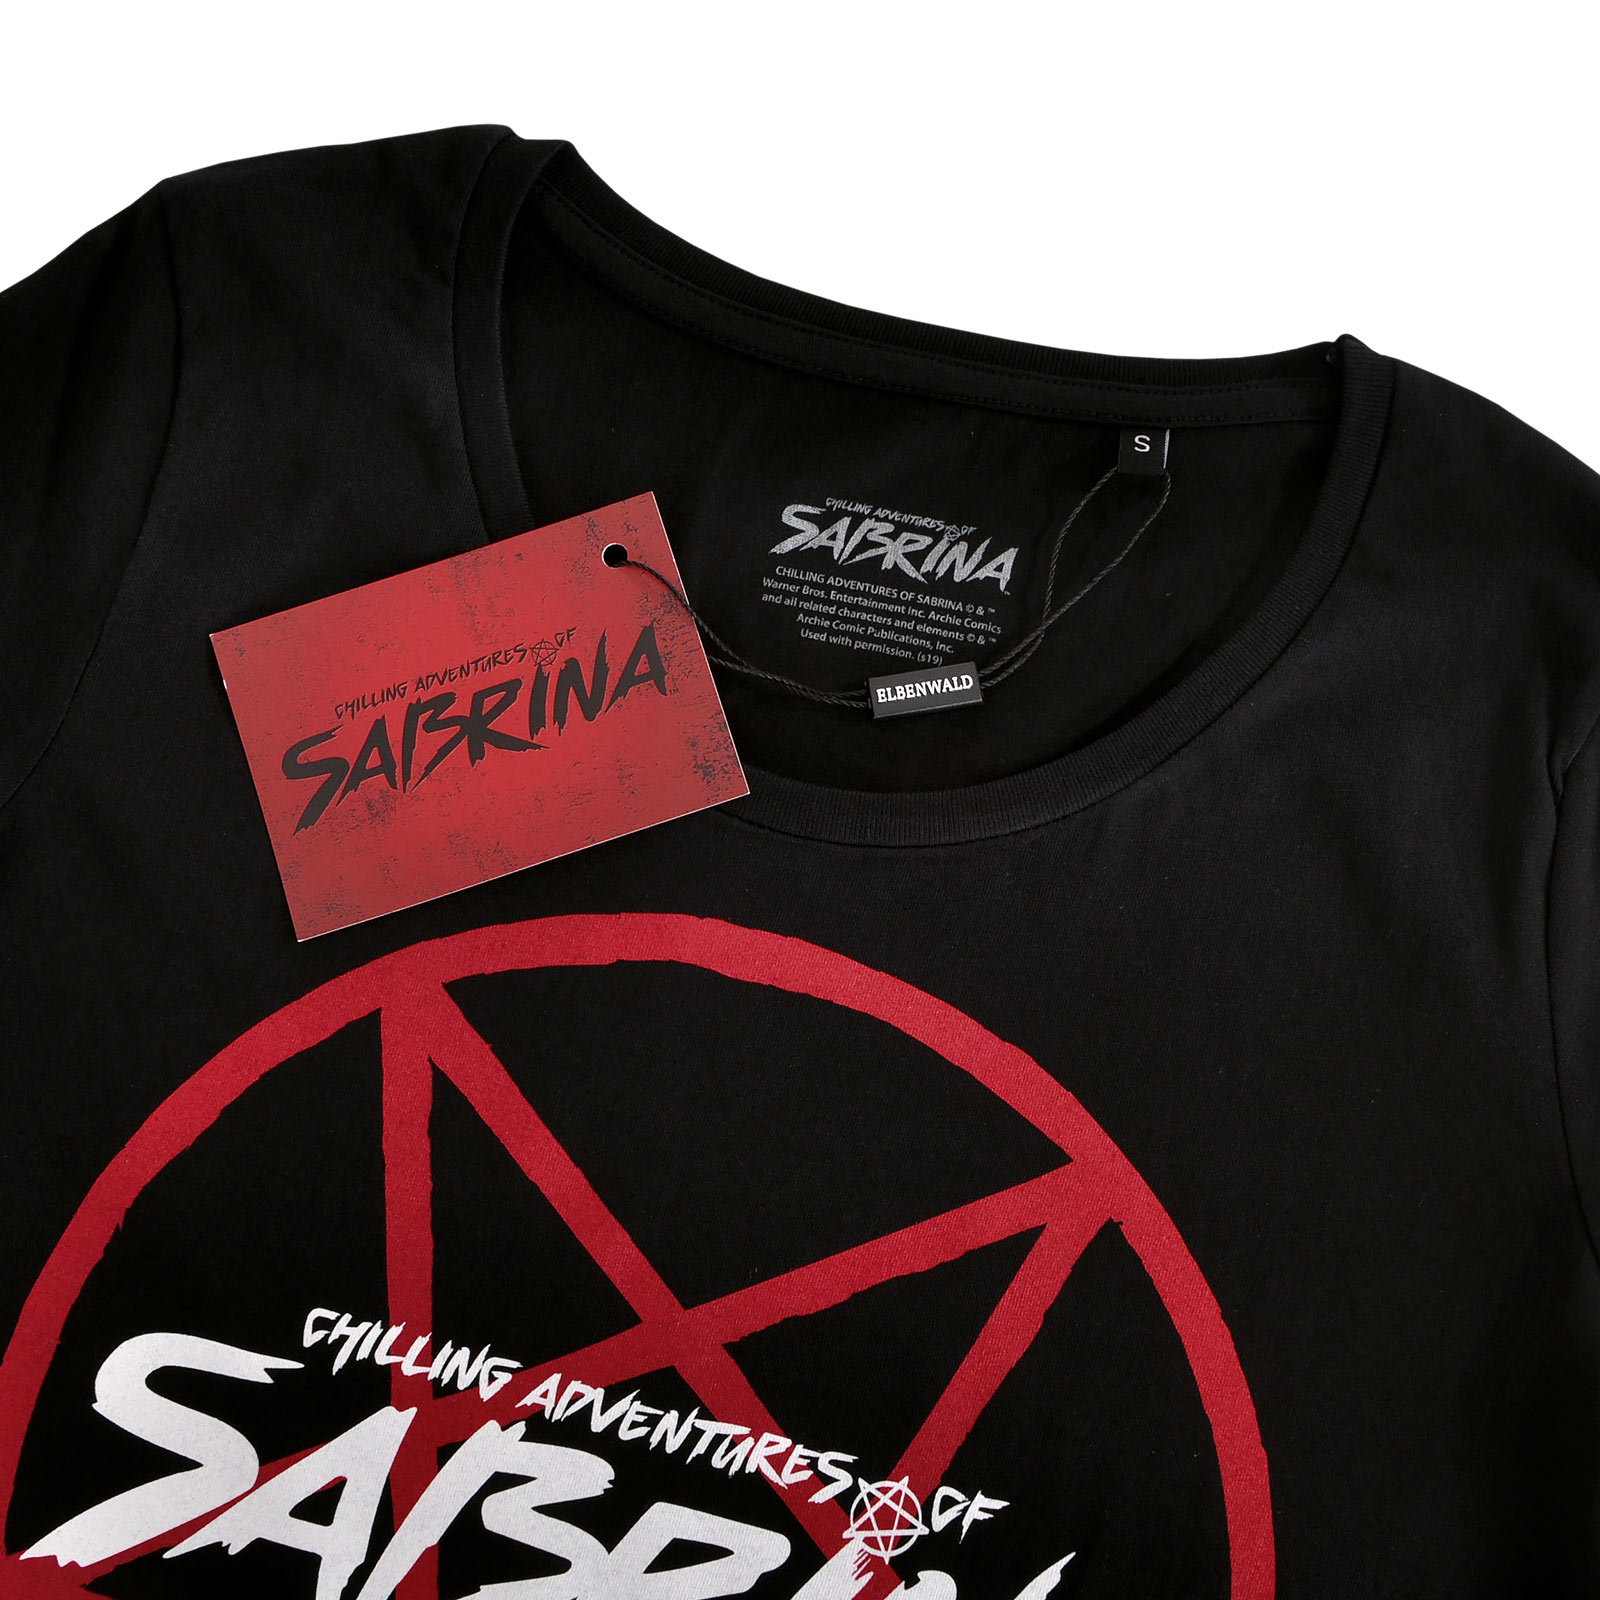 Chilling Adventures of Sabrina - T-shirt logo femme noir